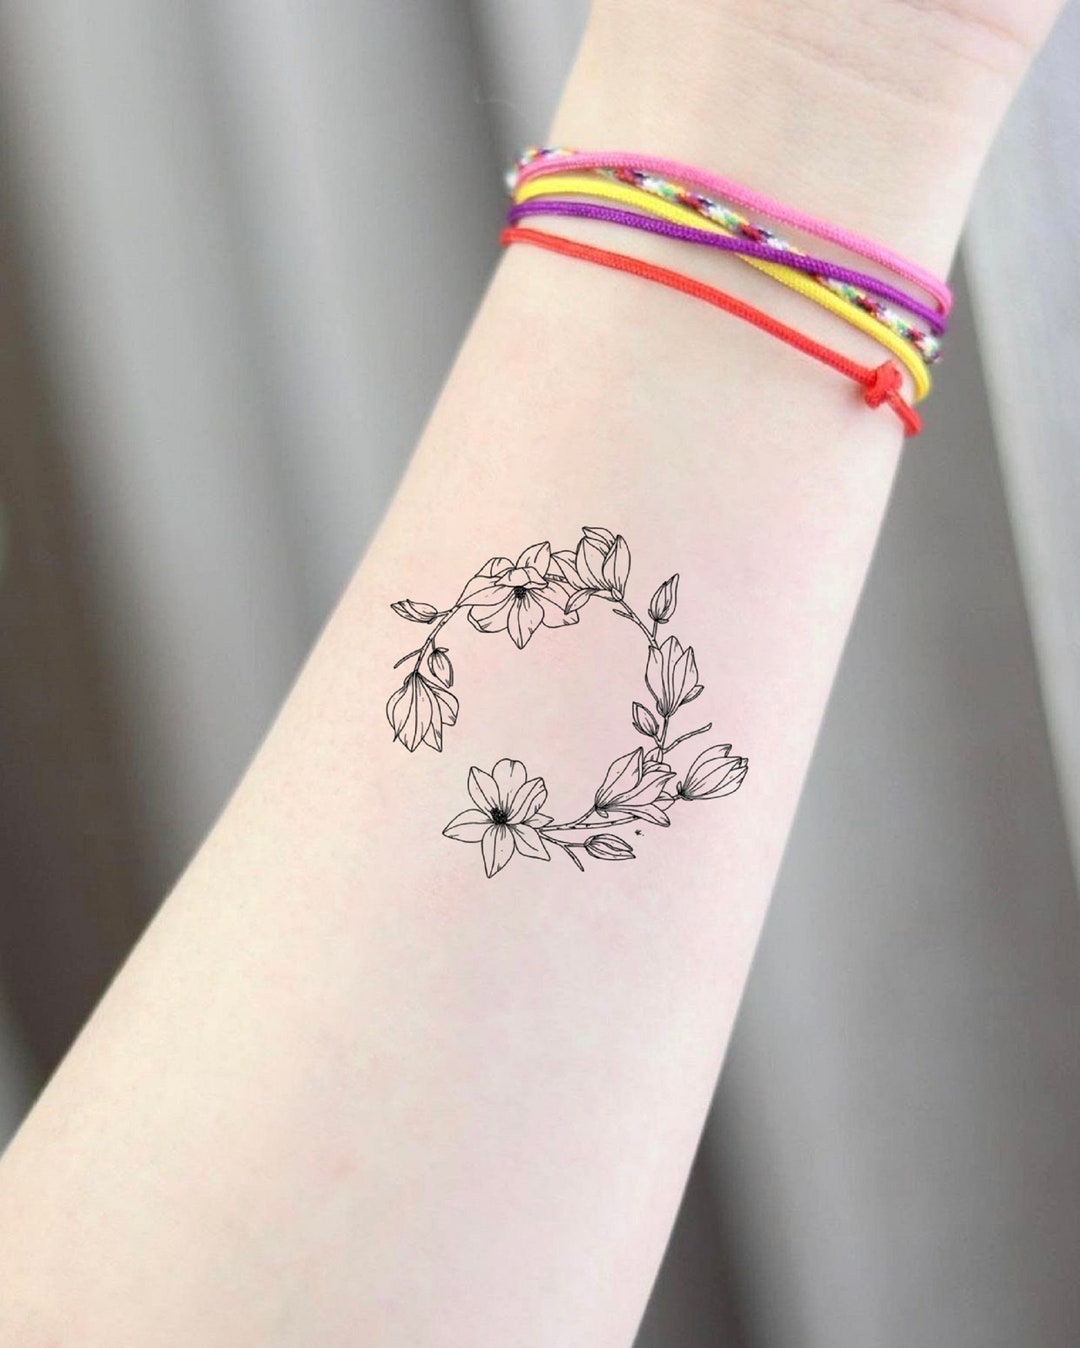 Flower bracelet tattoo on the right wrist.